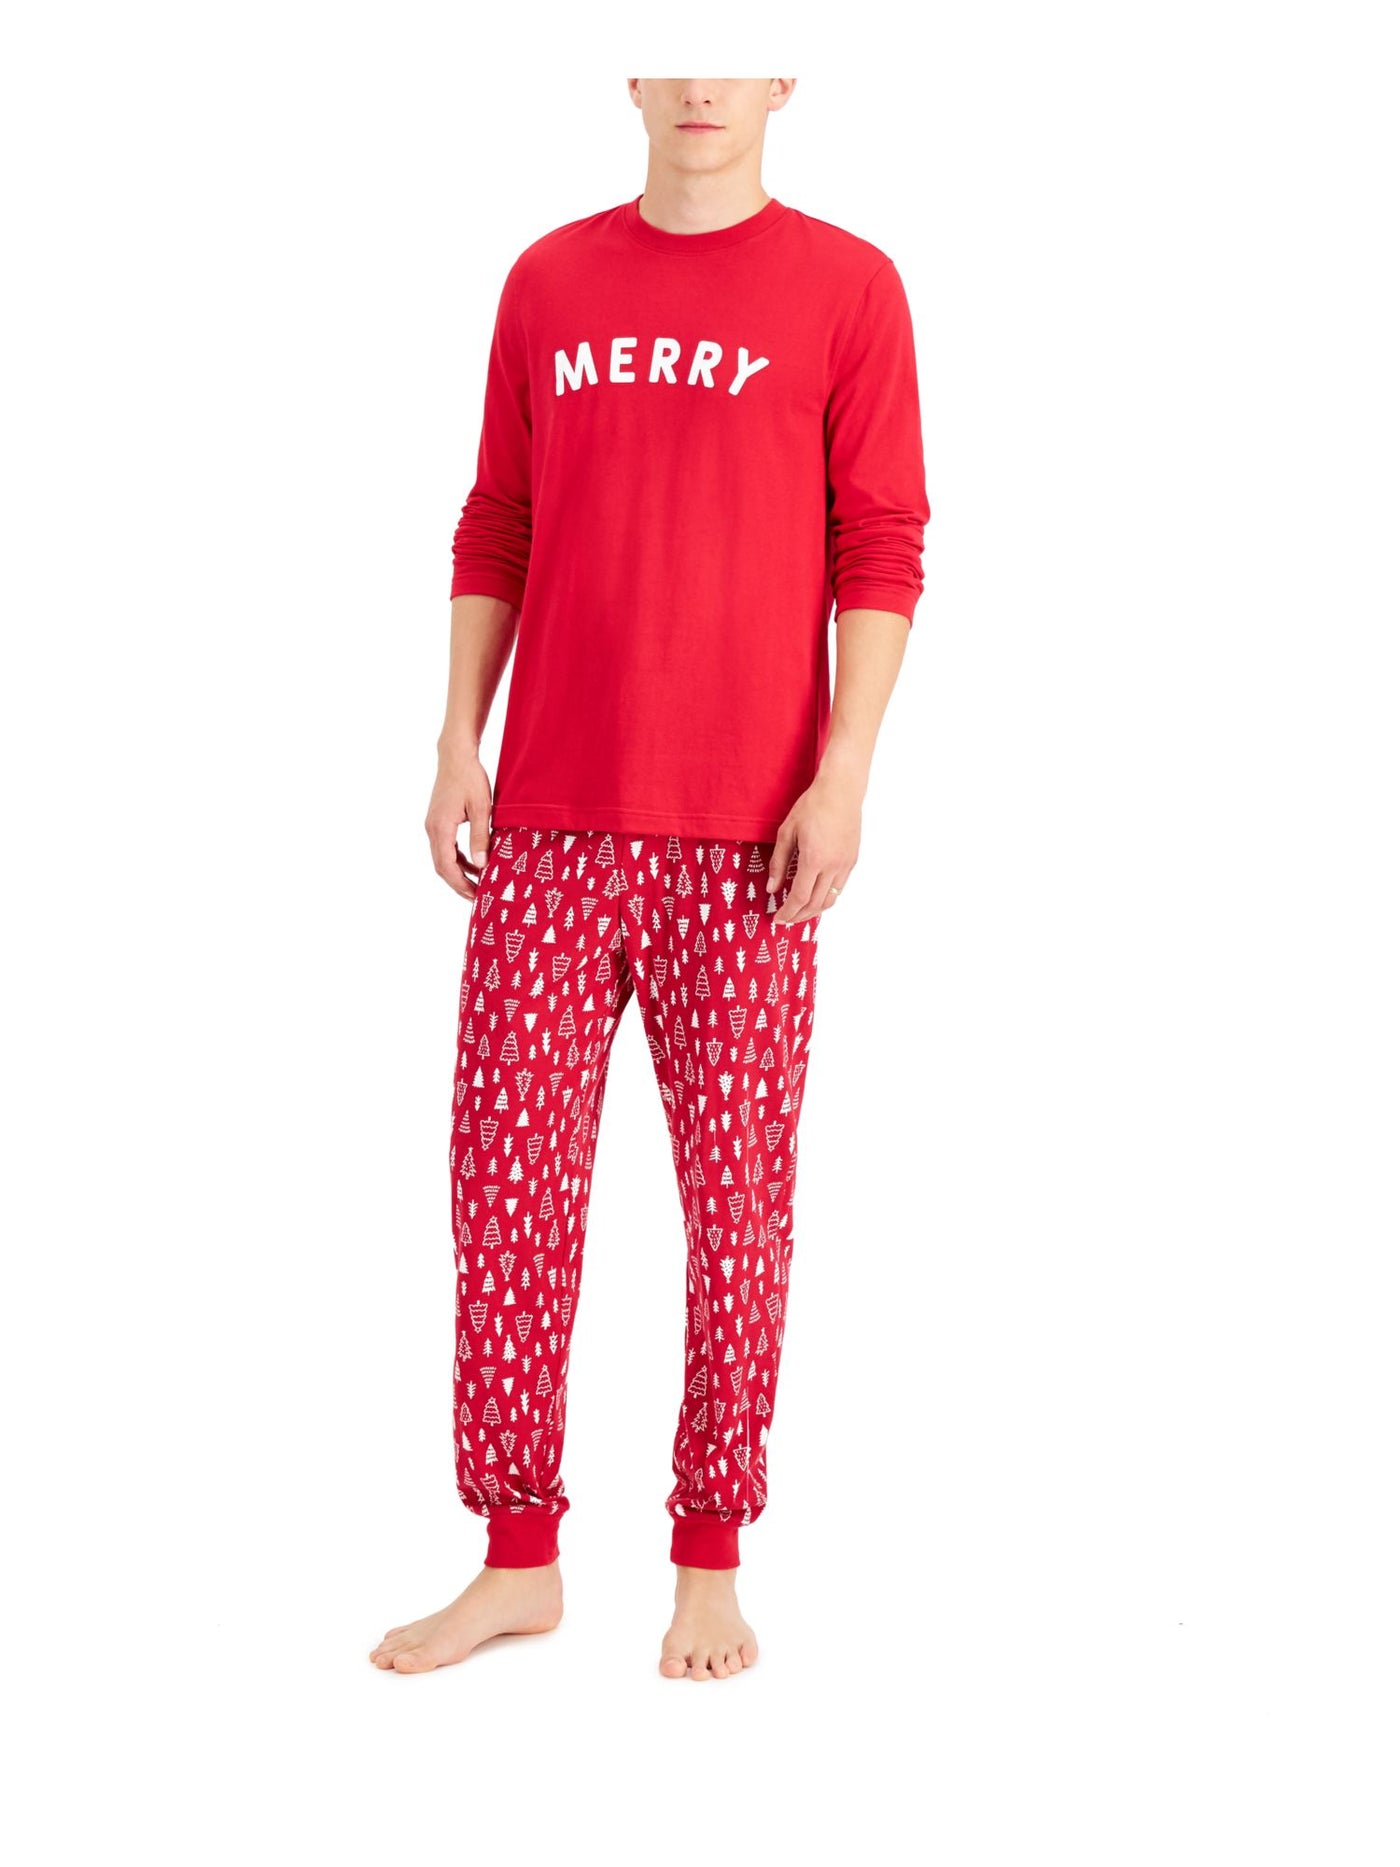 FAMILY PJs Mens Red Printed Elastic Band Long Sleeve T-Shirt Top Cuffed Pants Pajamas Big & Tall 2XB